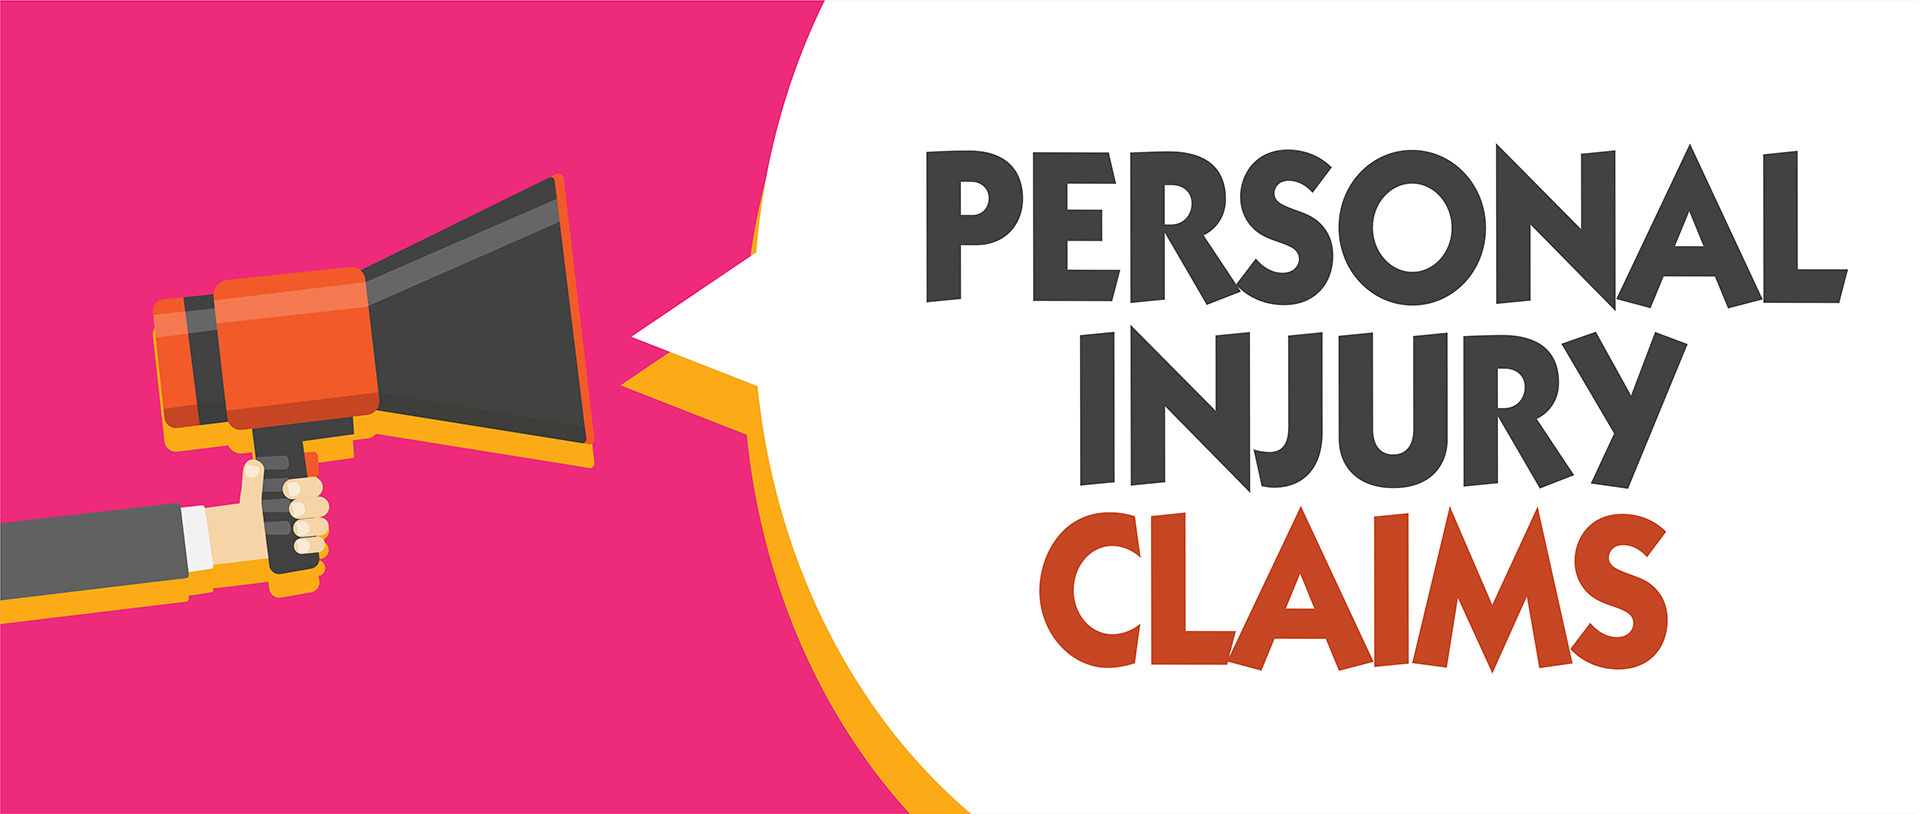 Starting a Personal Injury Claim